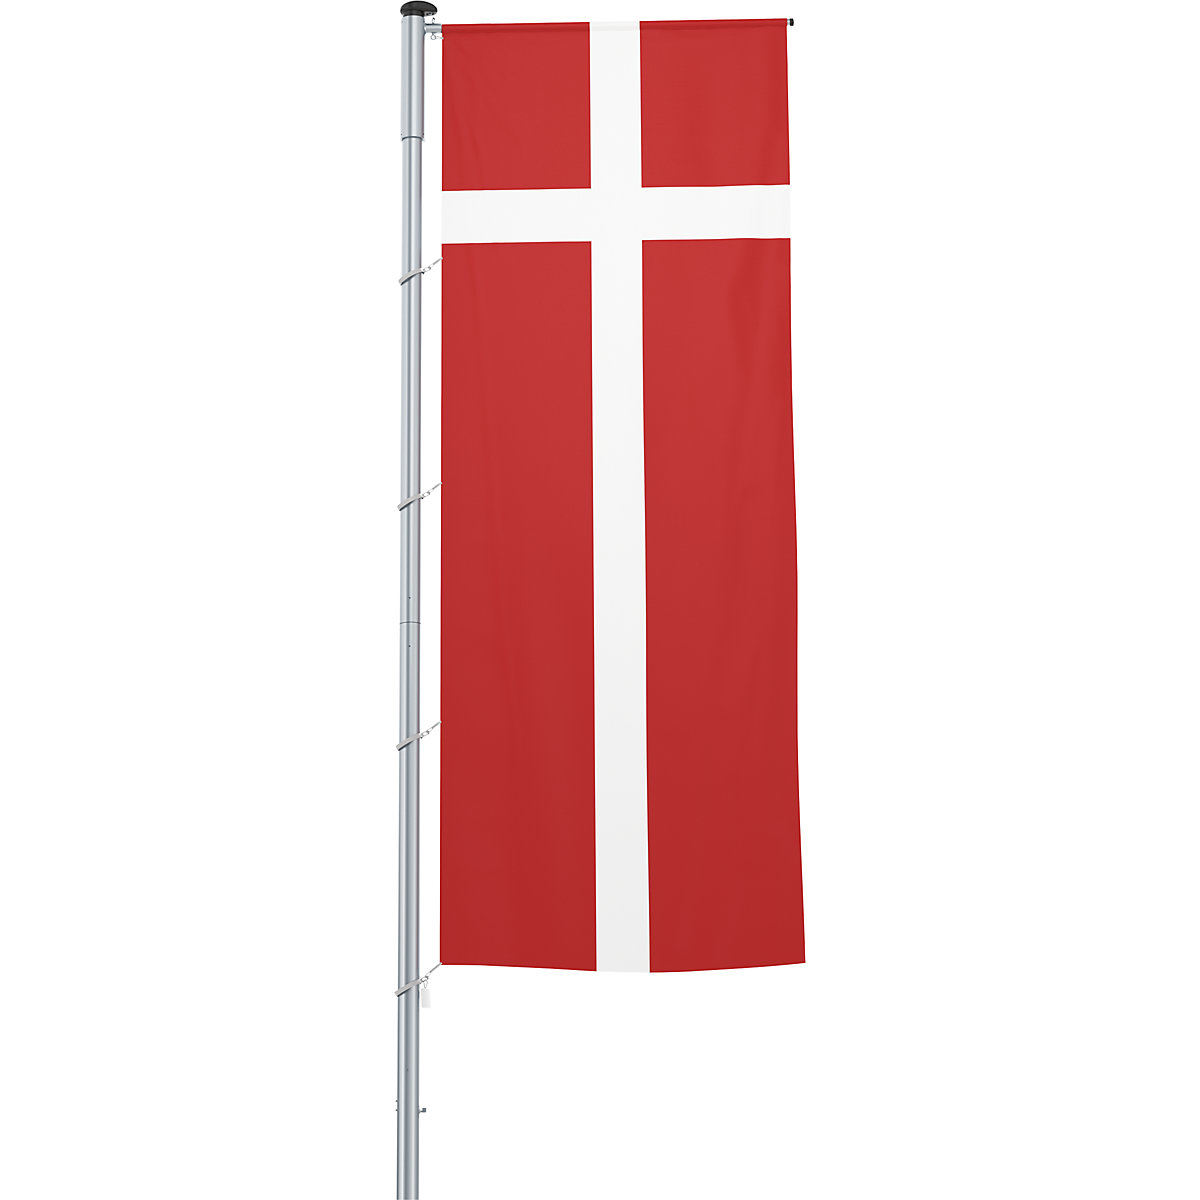 Steag pentru braț/drapel național – Mannus, format 1,2 x 3 m, Danemarca-10